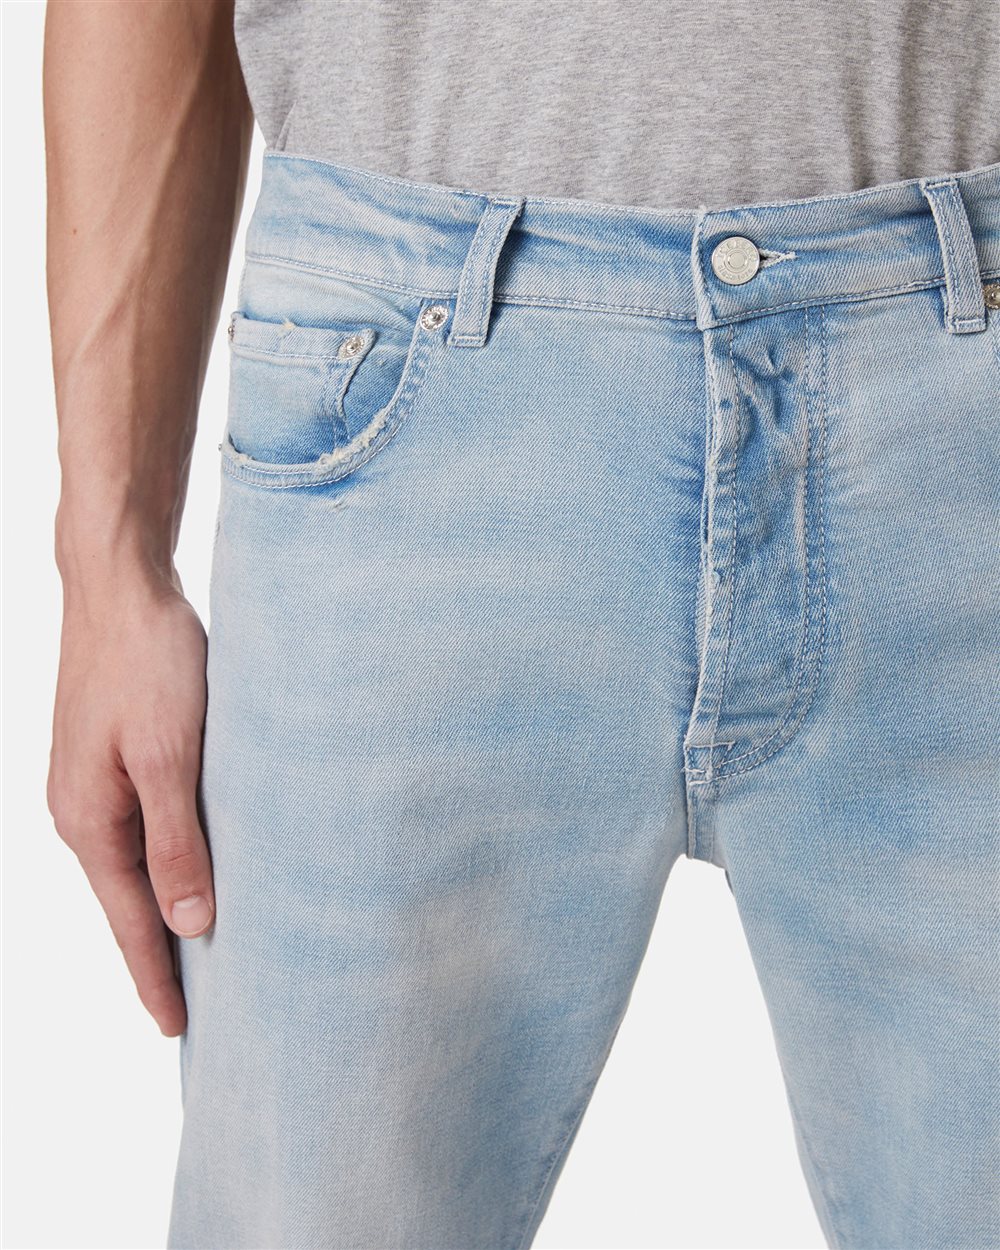 Jeans 5 tasche con logo - Iceberg - Official Website